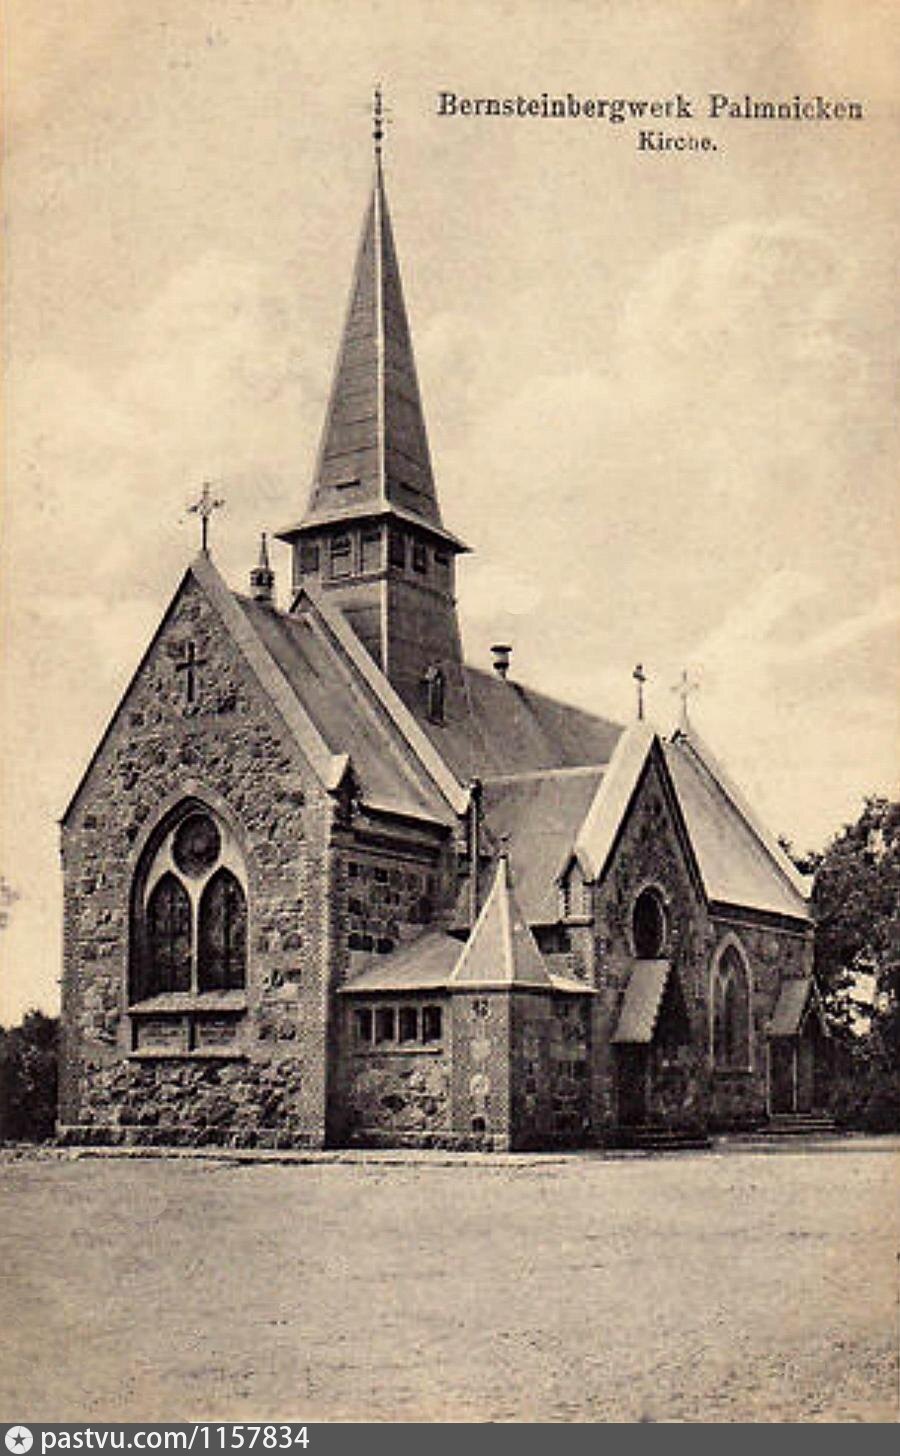  1915-1925. Palmnicken, Kirche.